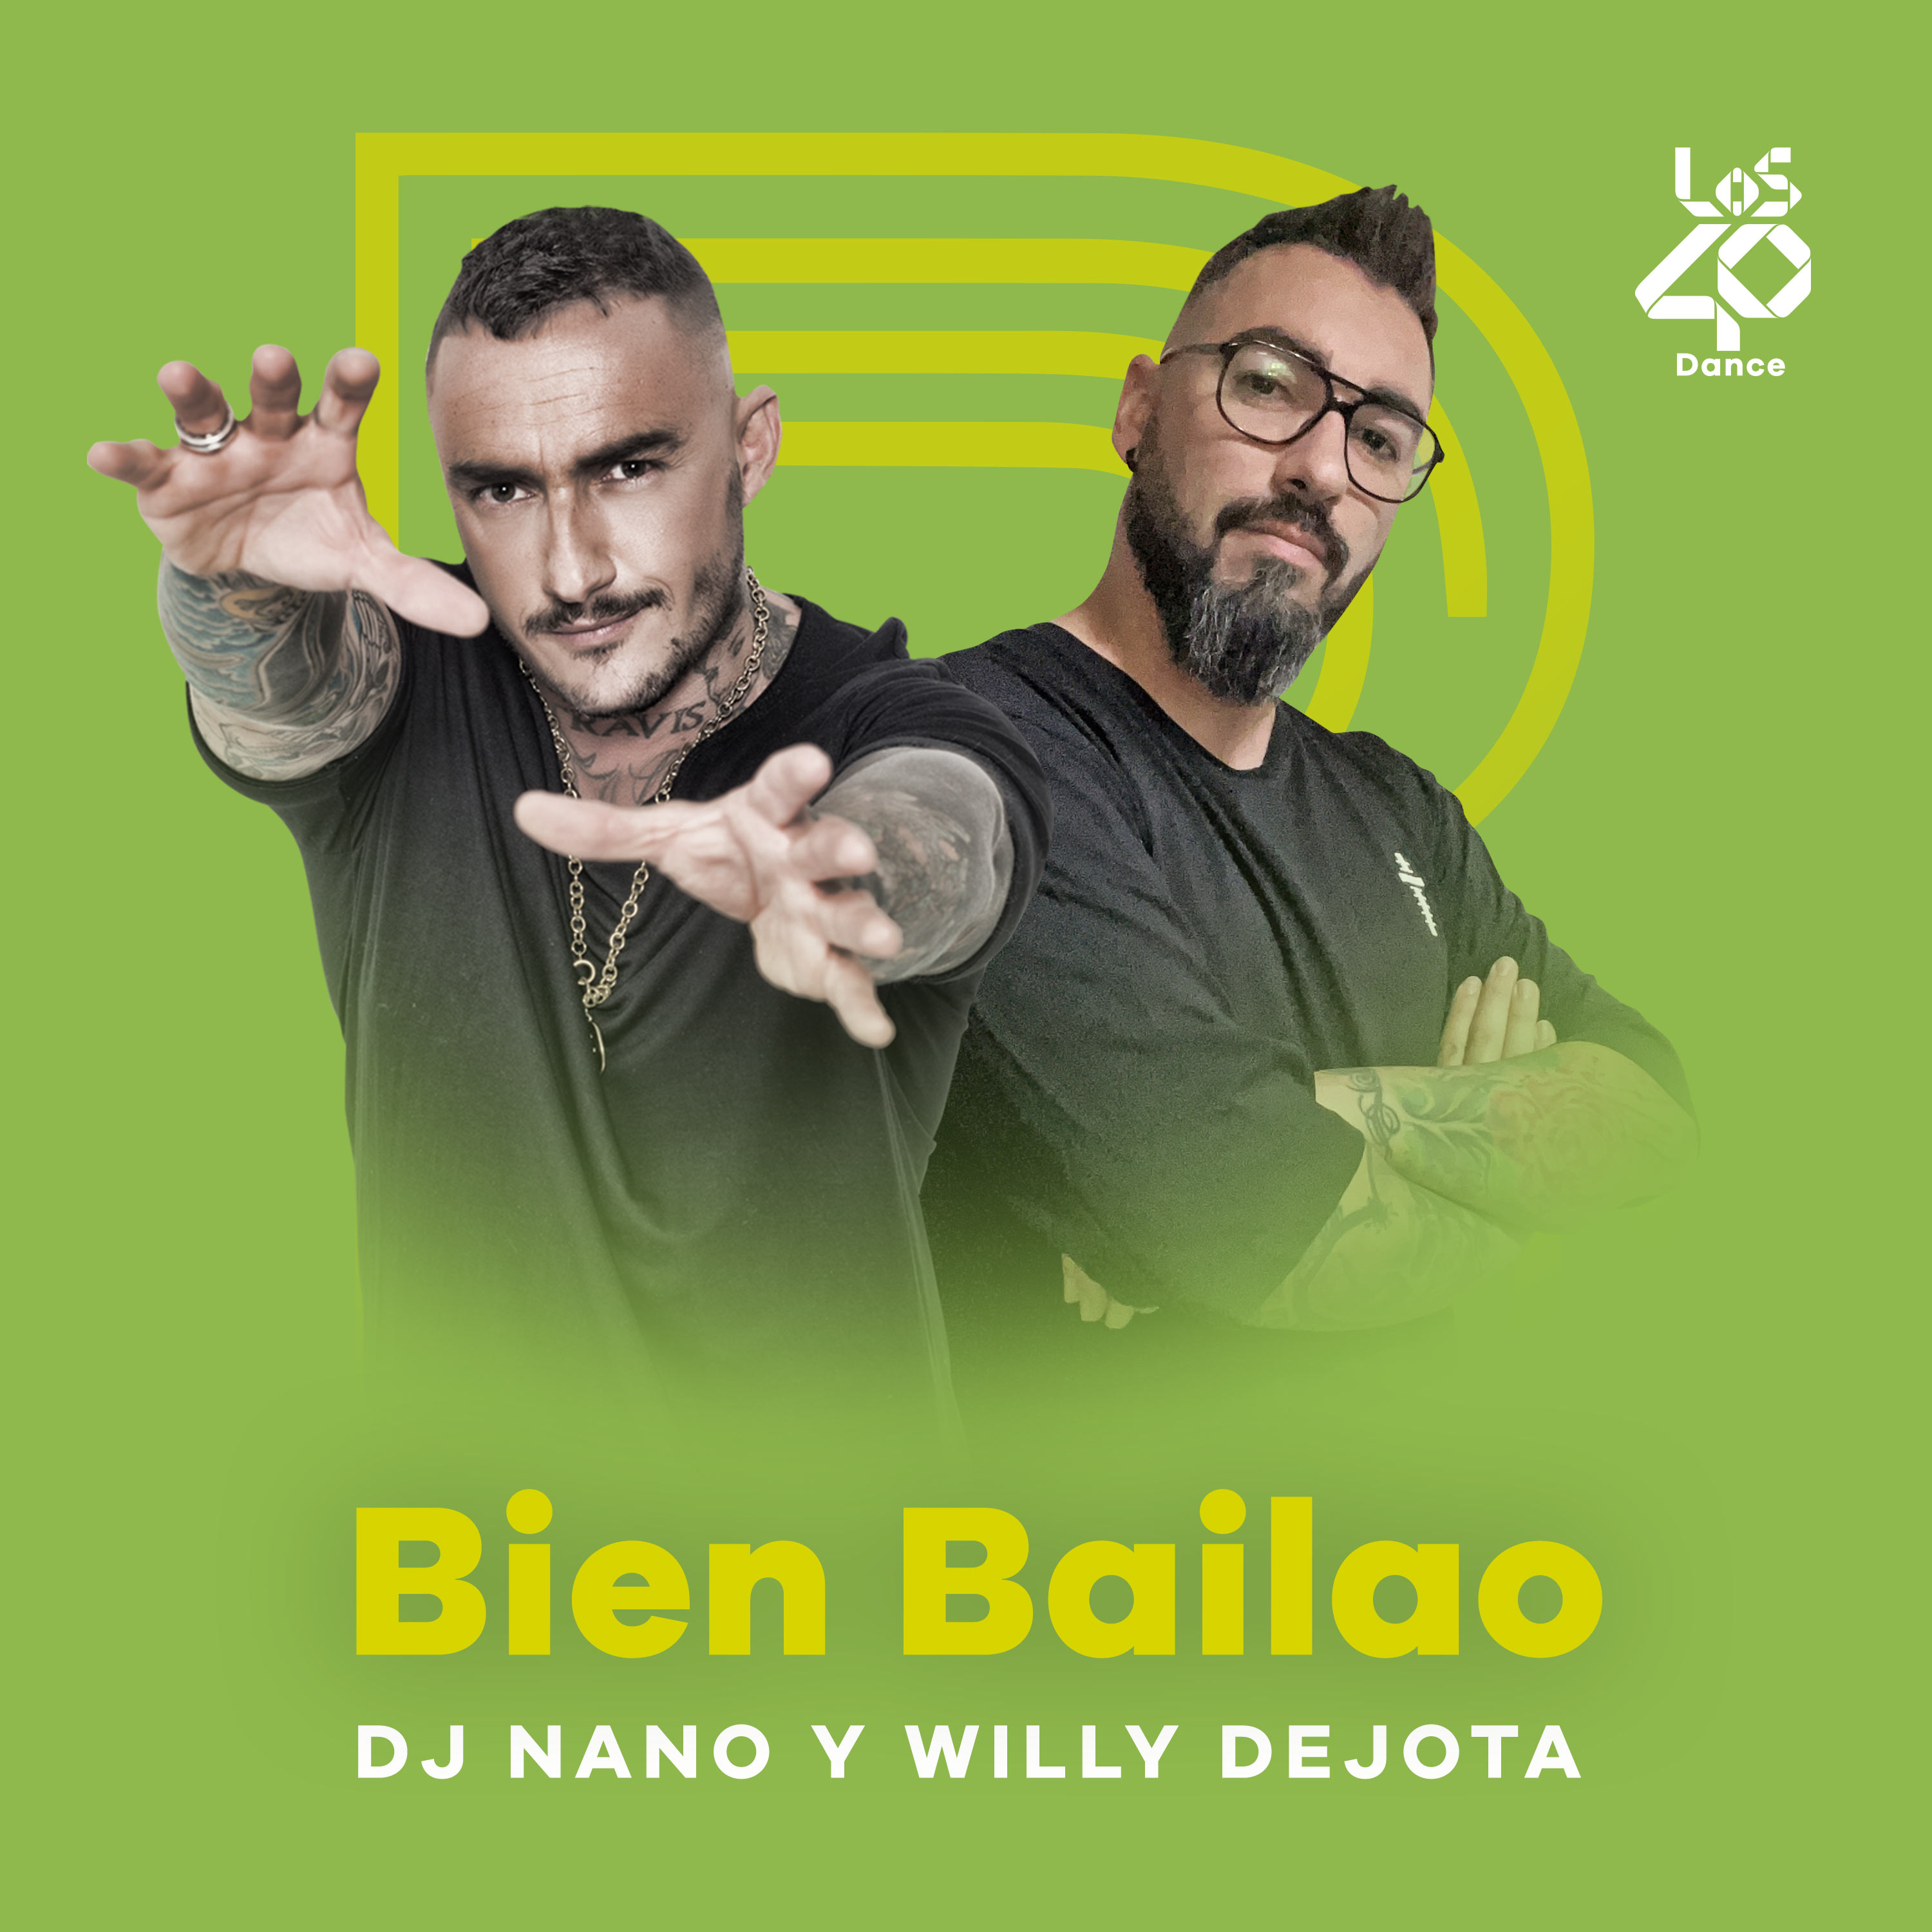 Bien Bailao by DJ Nano, 21-22h - 19/11/2021